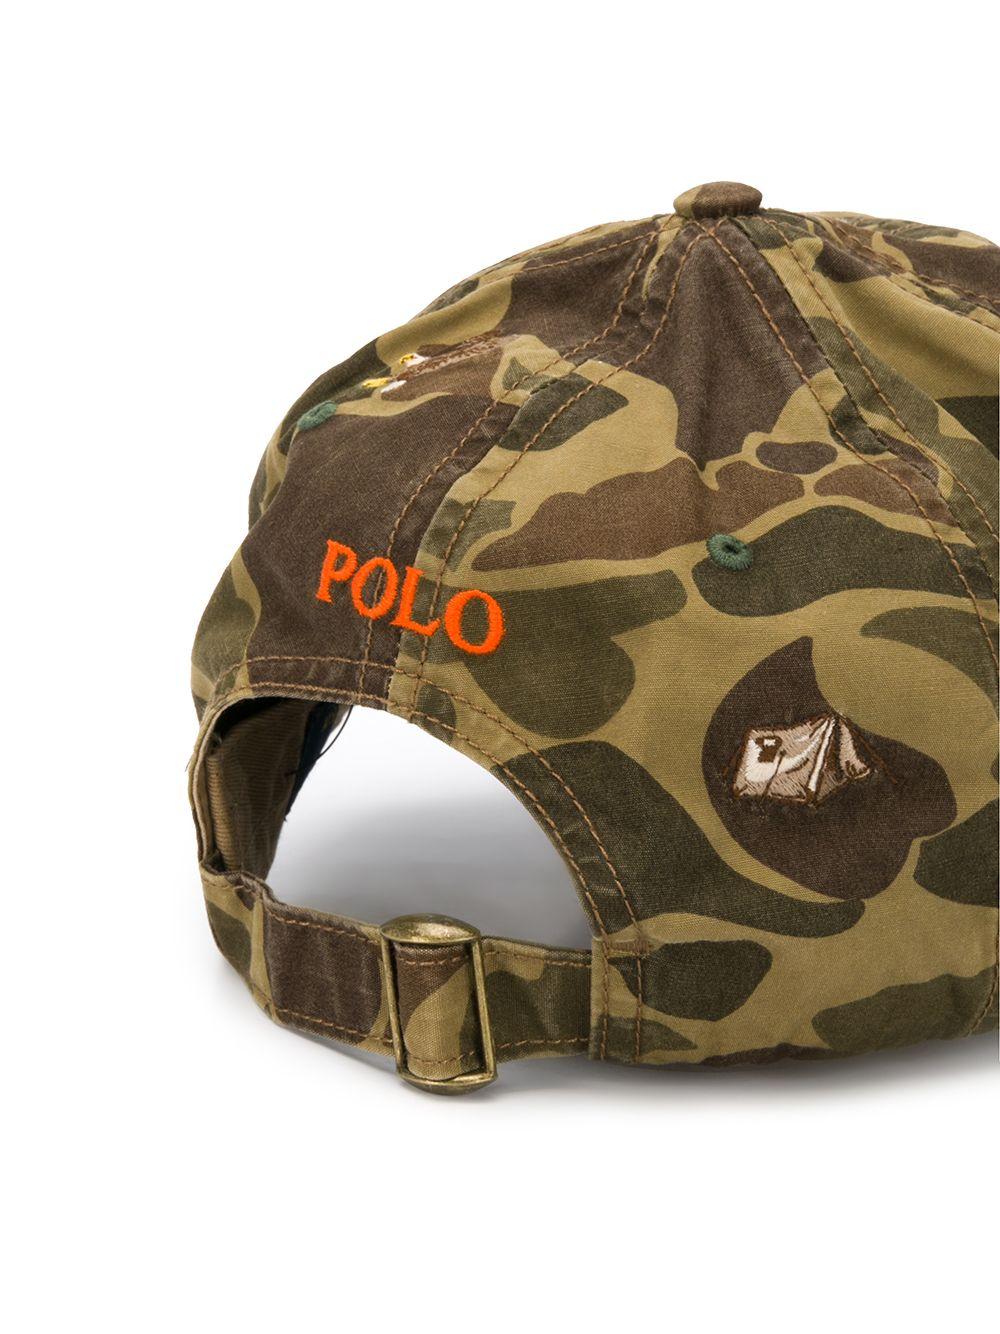 polo hunting cap green